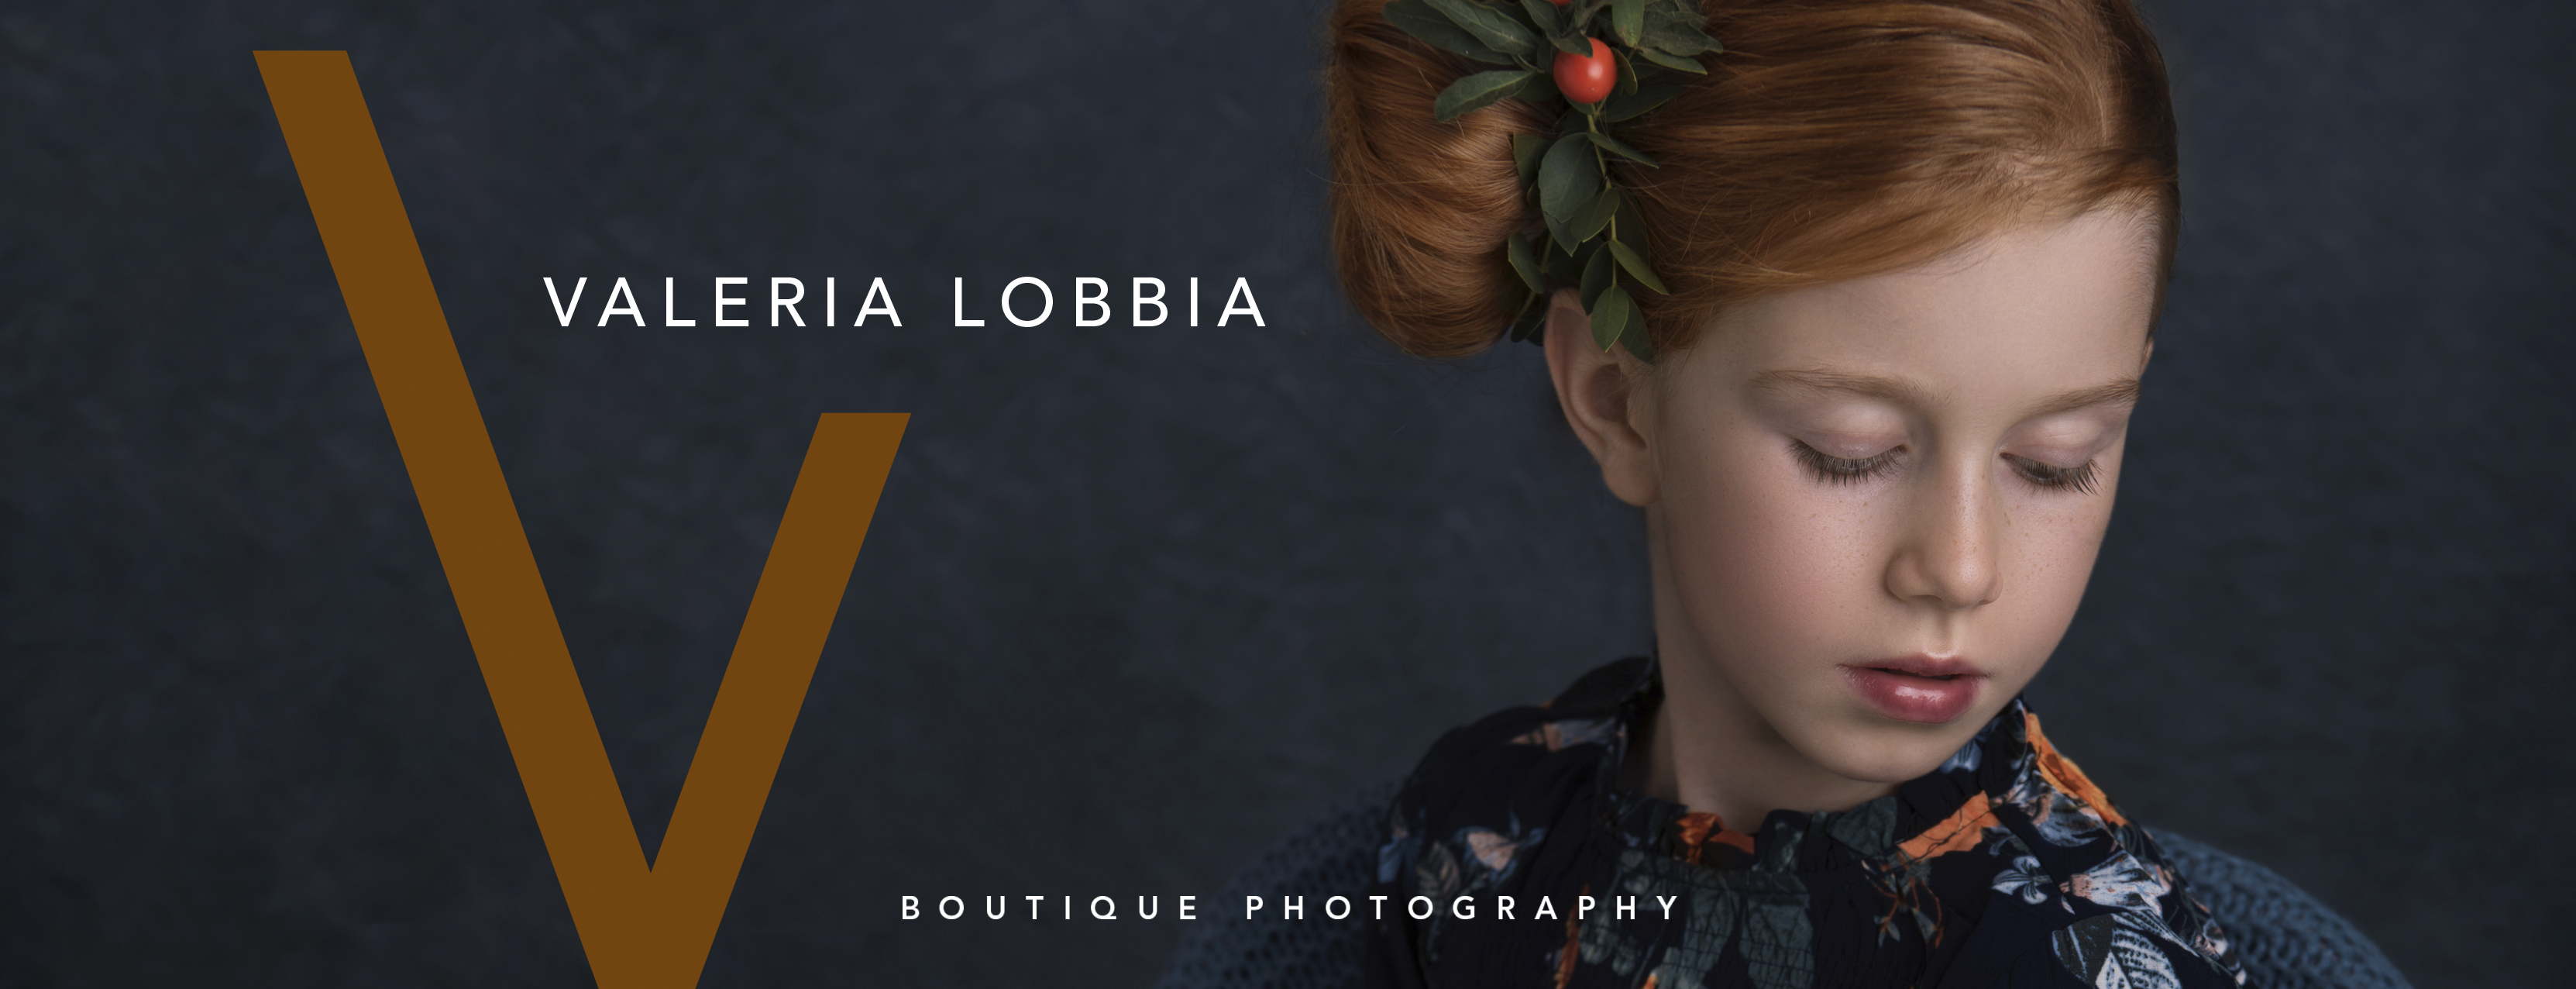 Valeria Lobbia Boutique Photography